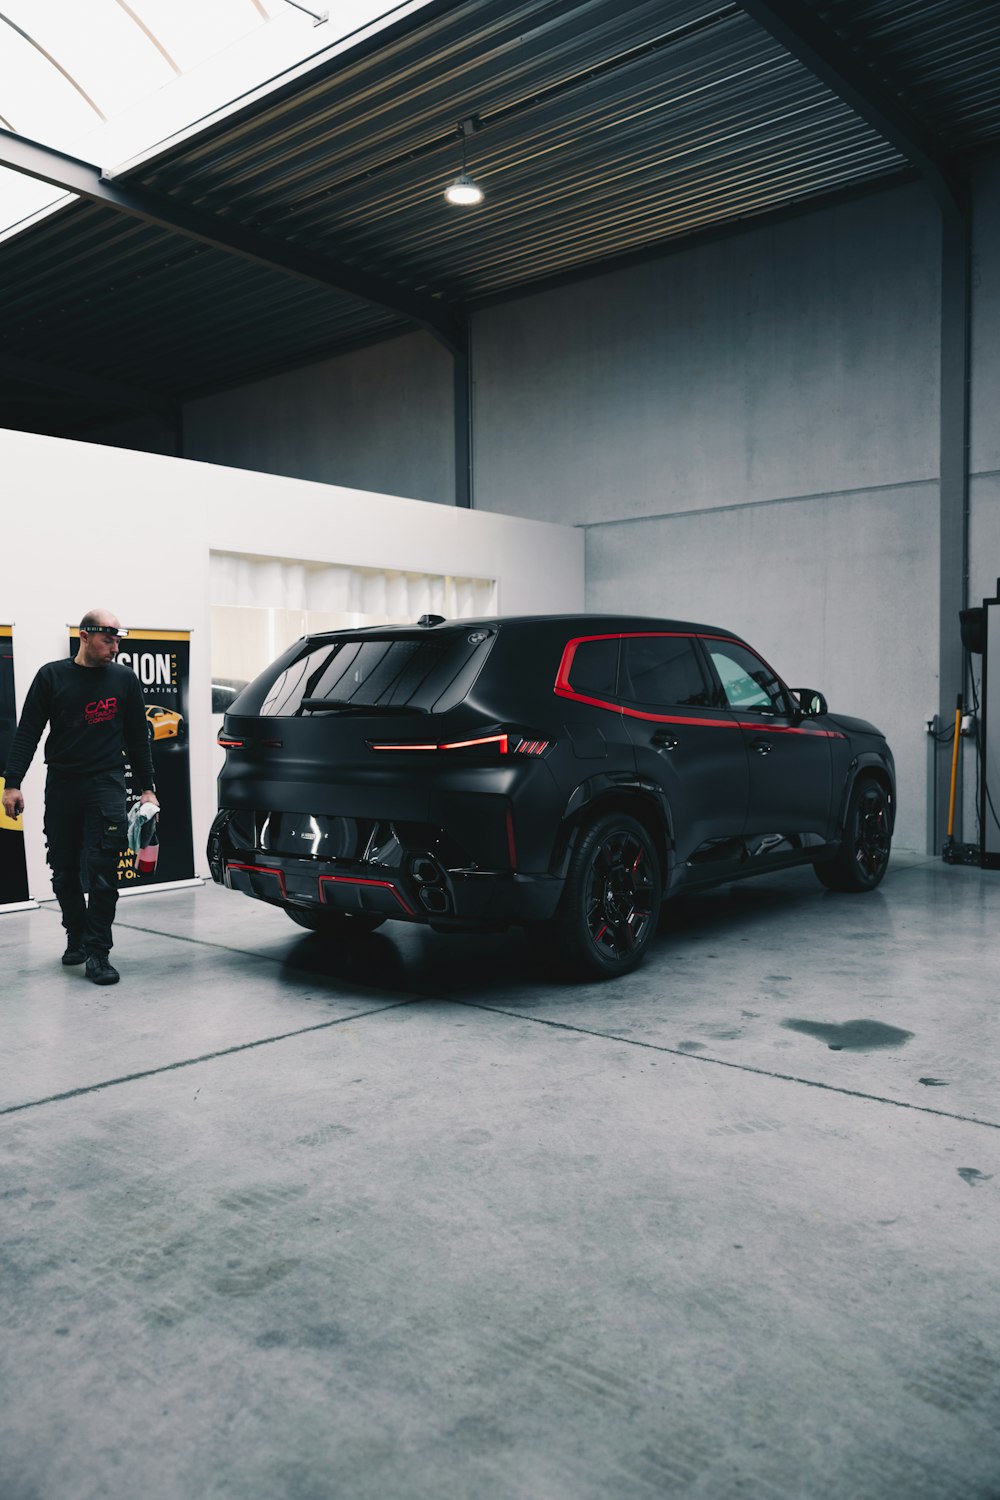 a man standing next to a black car in a garage